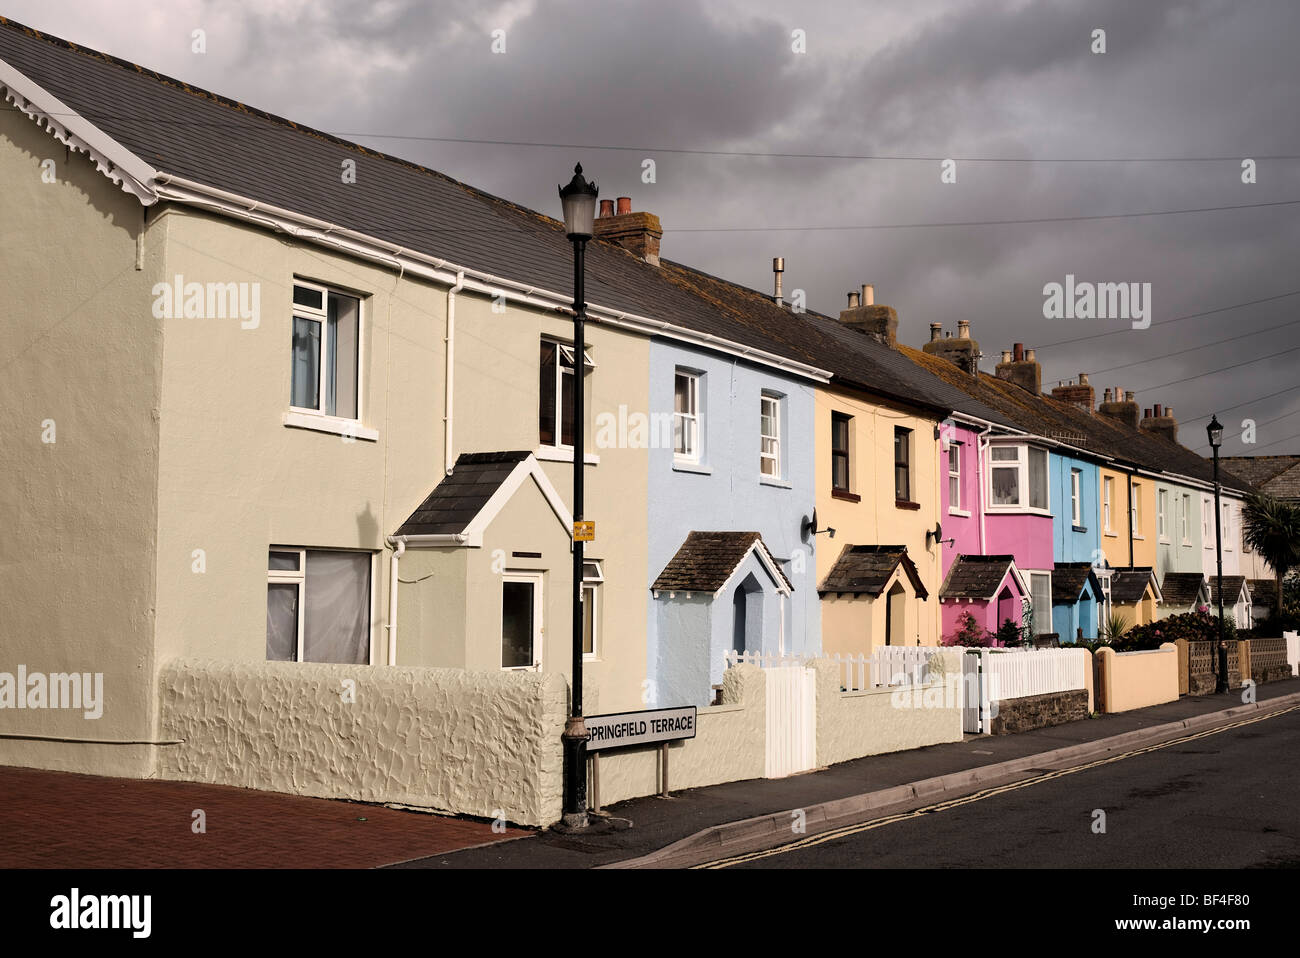 Springfield-Terrasse, Westward Ho!, Devon, farbige Terrasse Häuser Stockfoto